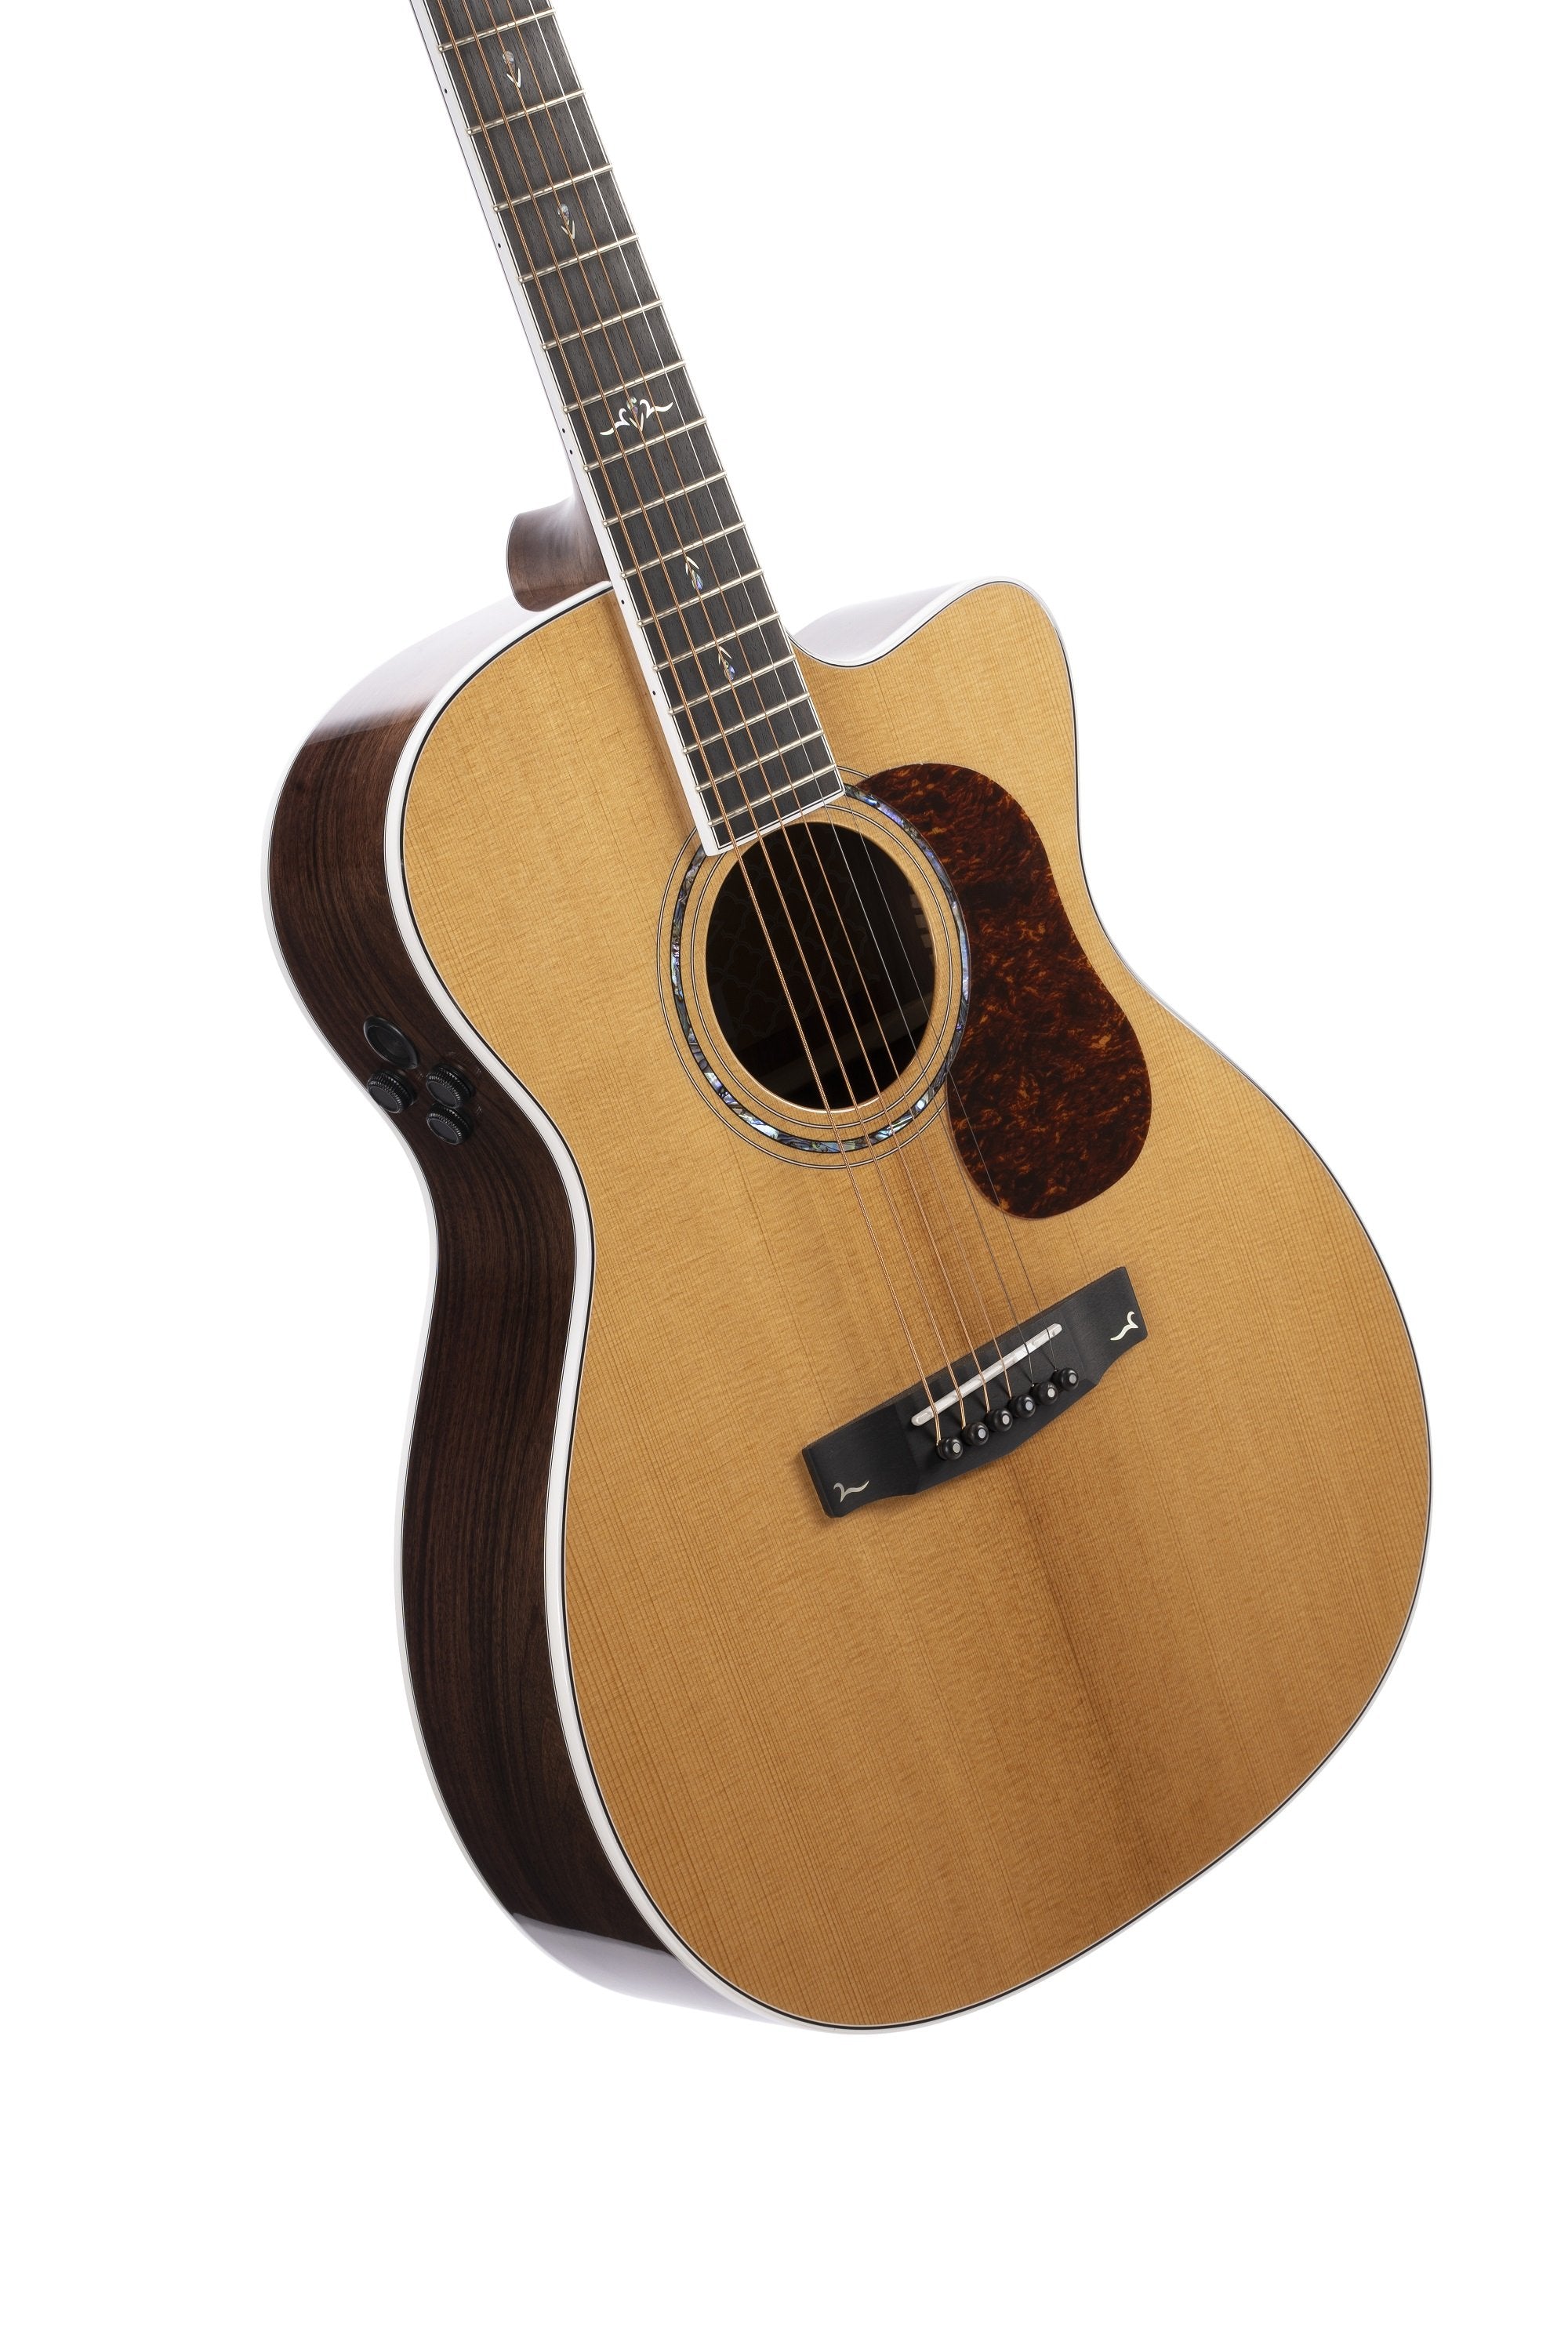 Cort Gold OC8 Natural, Acoustic Guitar for sale at Richards Guitars.